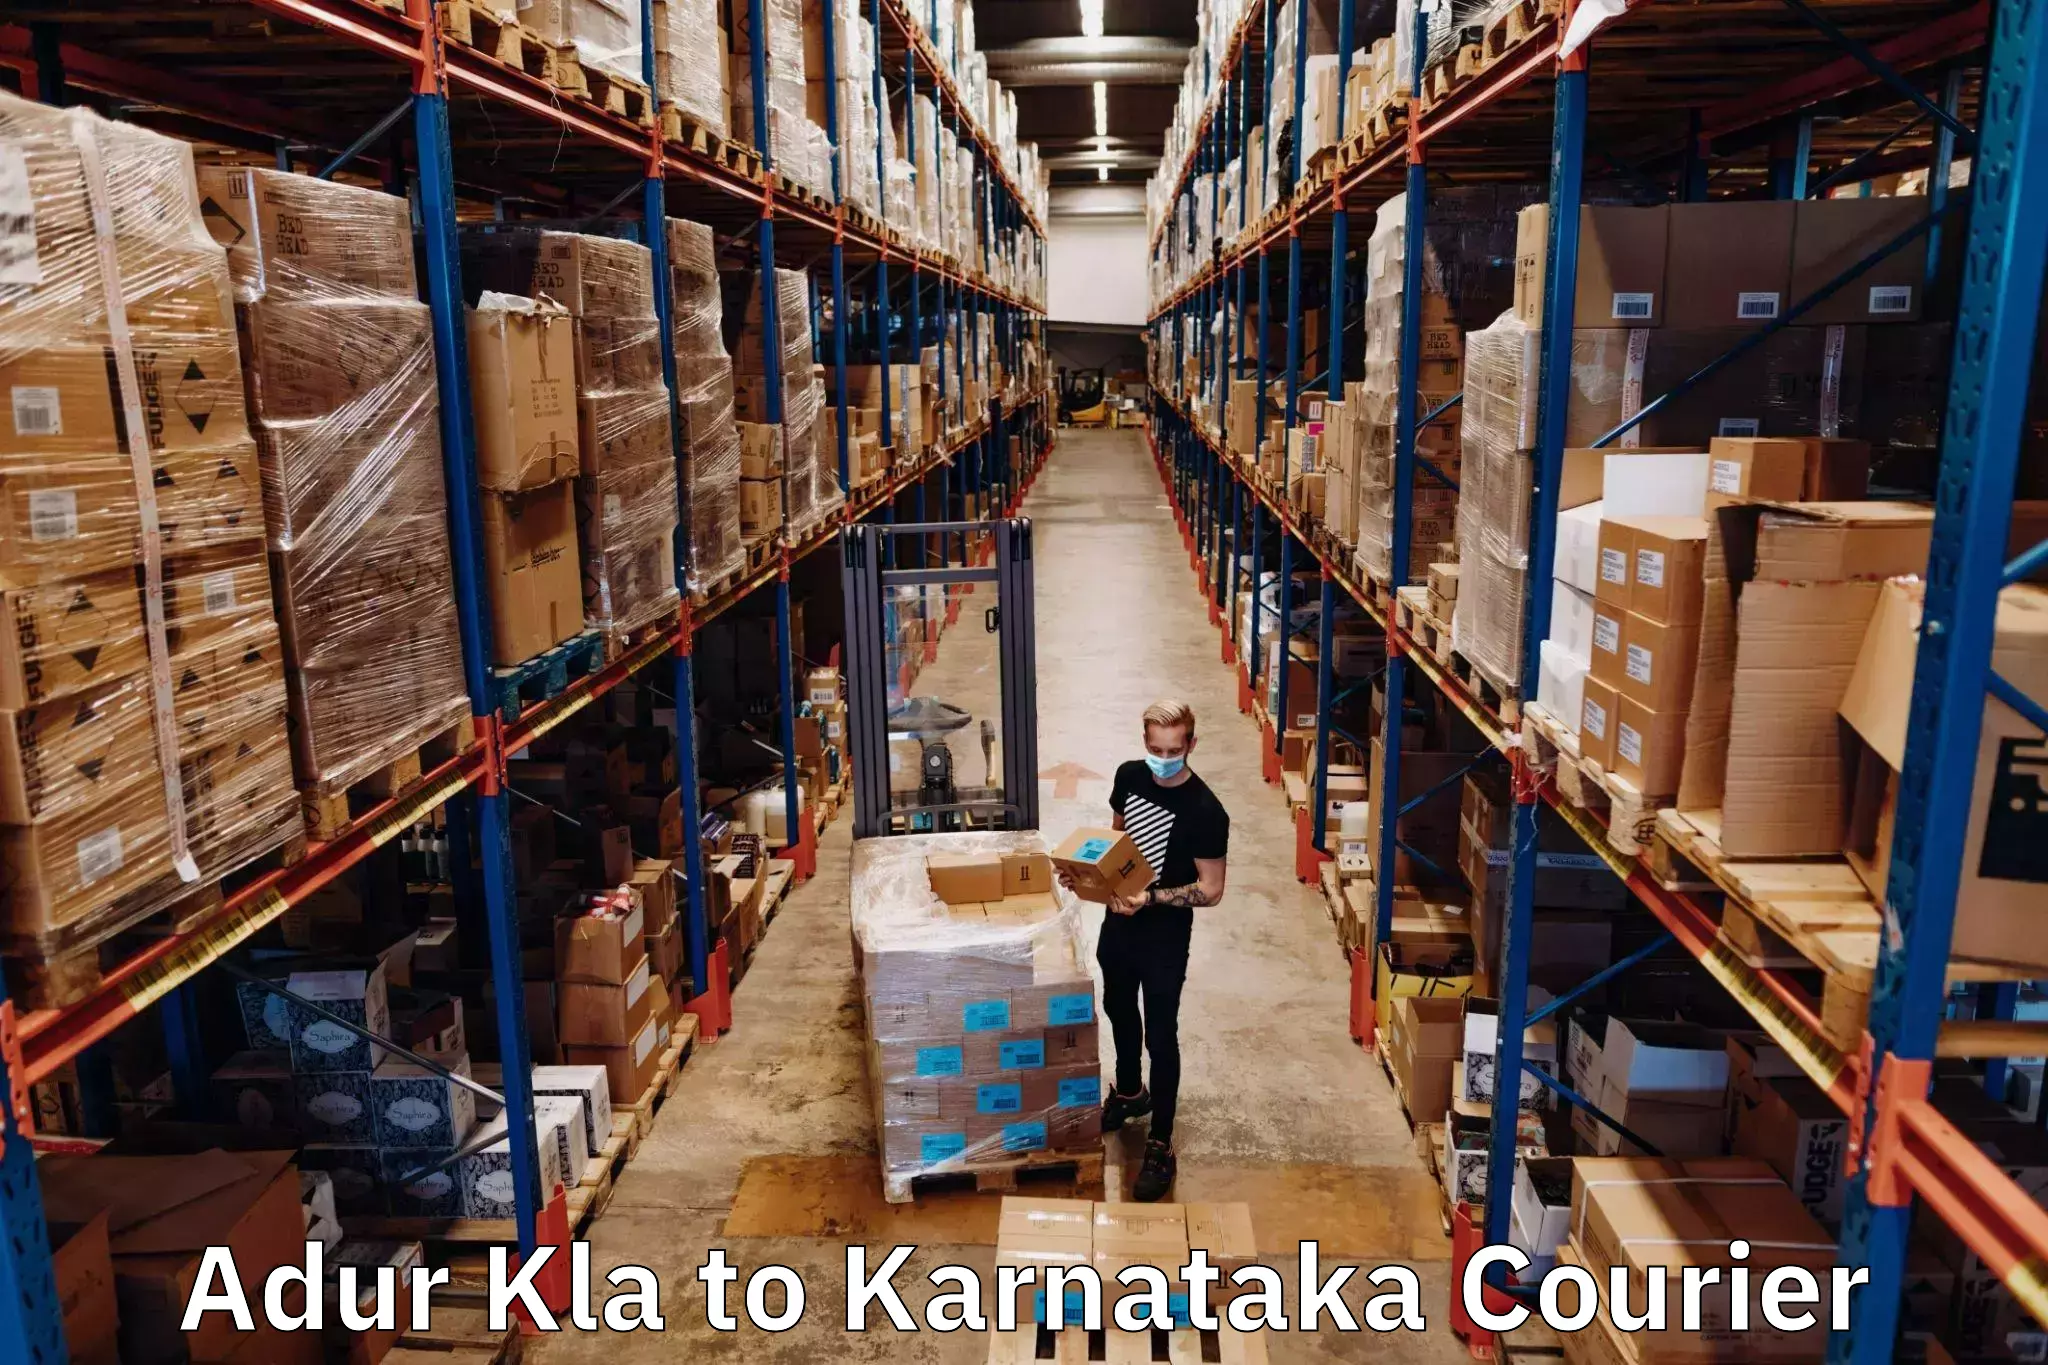 Global logistics network Adur Kla to Karnataka